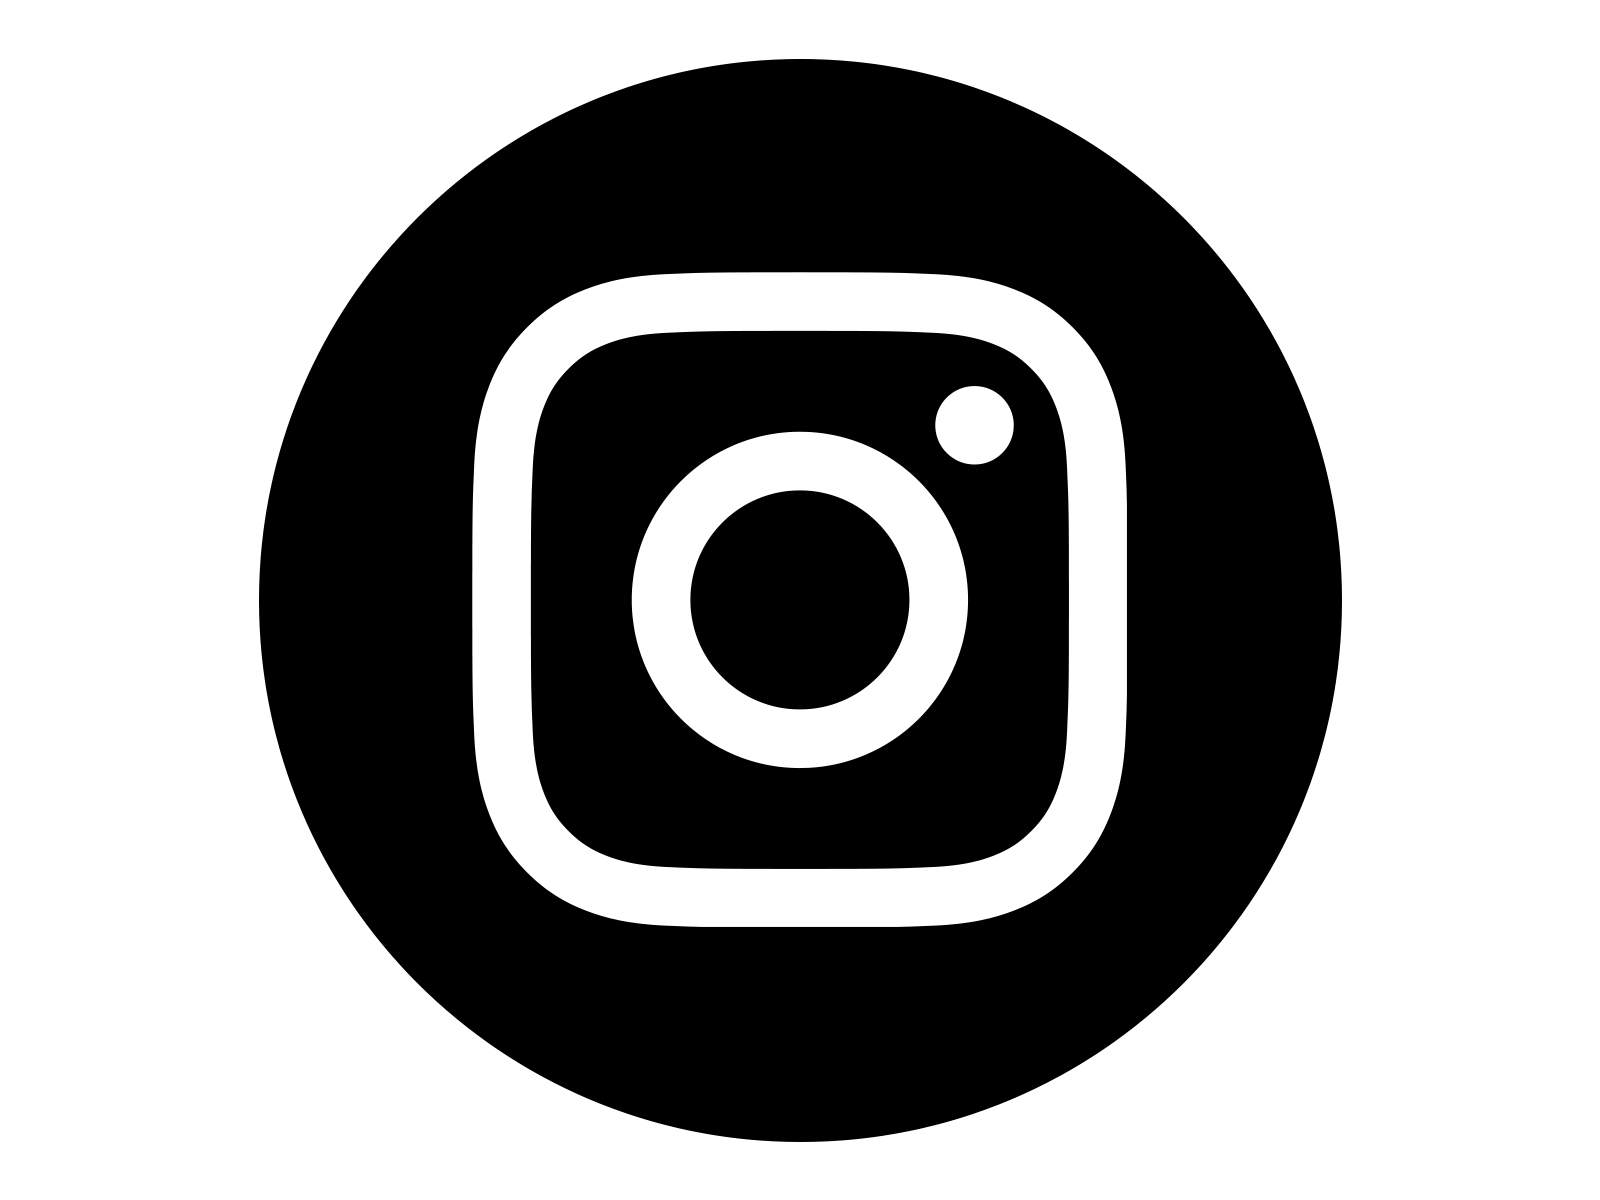 Black and White Circle Logo - Instagram Logo PNG Transparent & SVG Vector